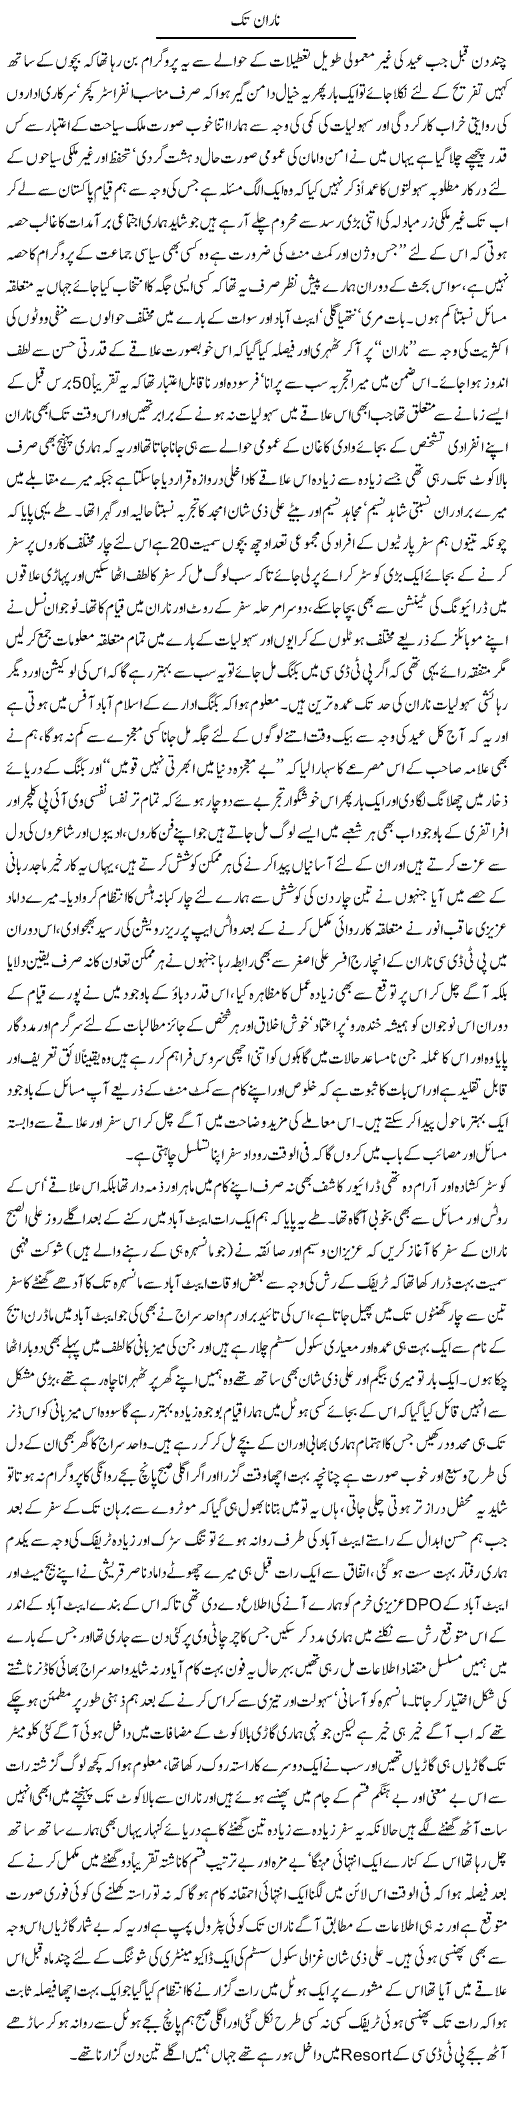 Naran tak | Amjad Islam Amjad | Daily Urdu Columns